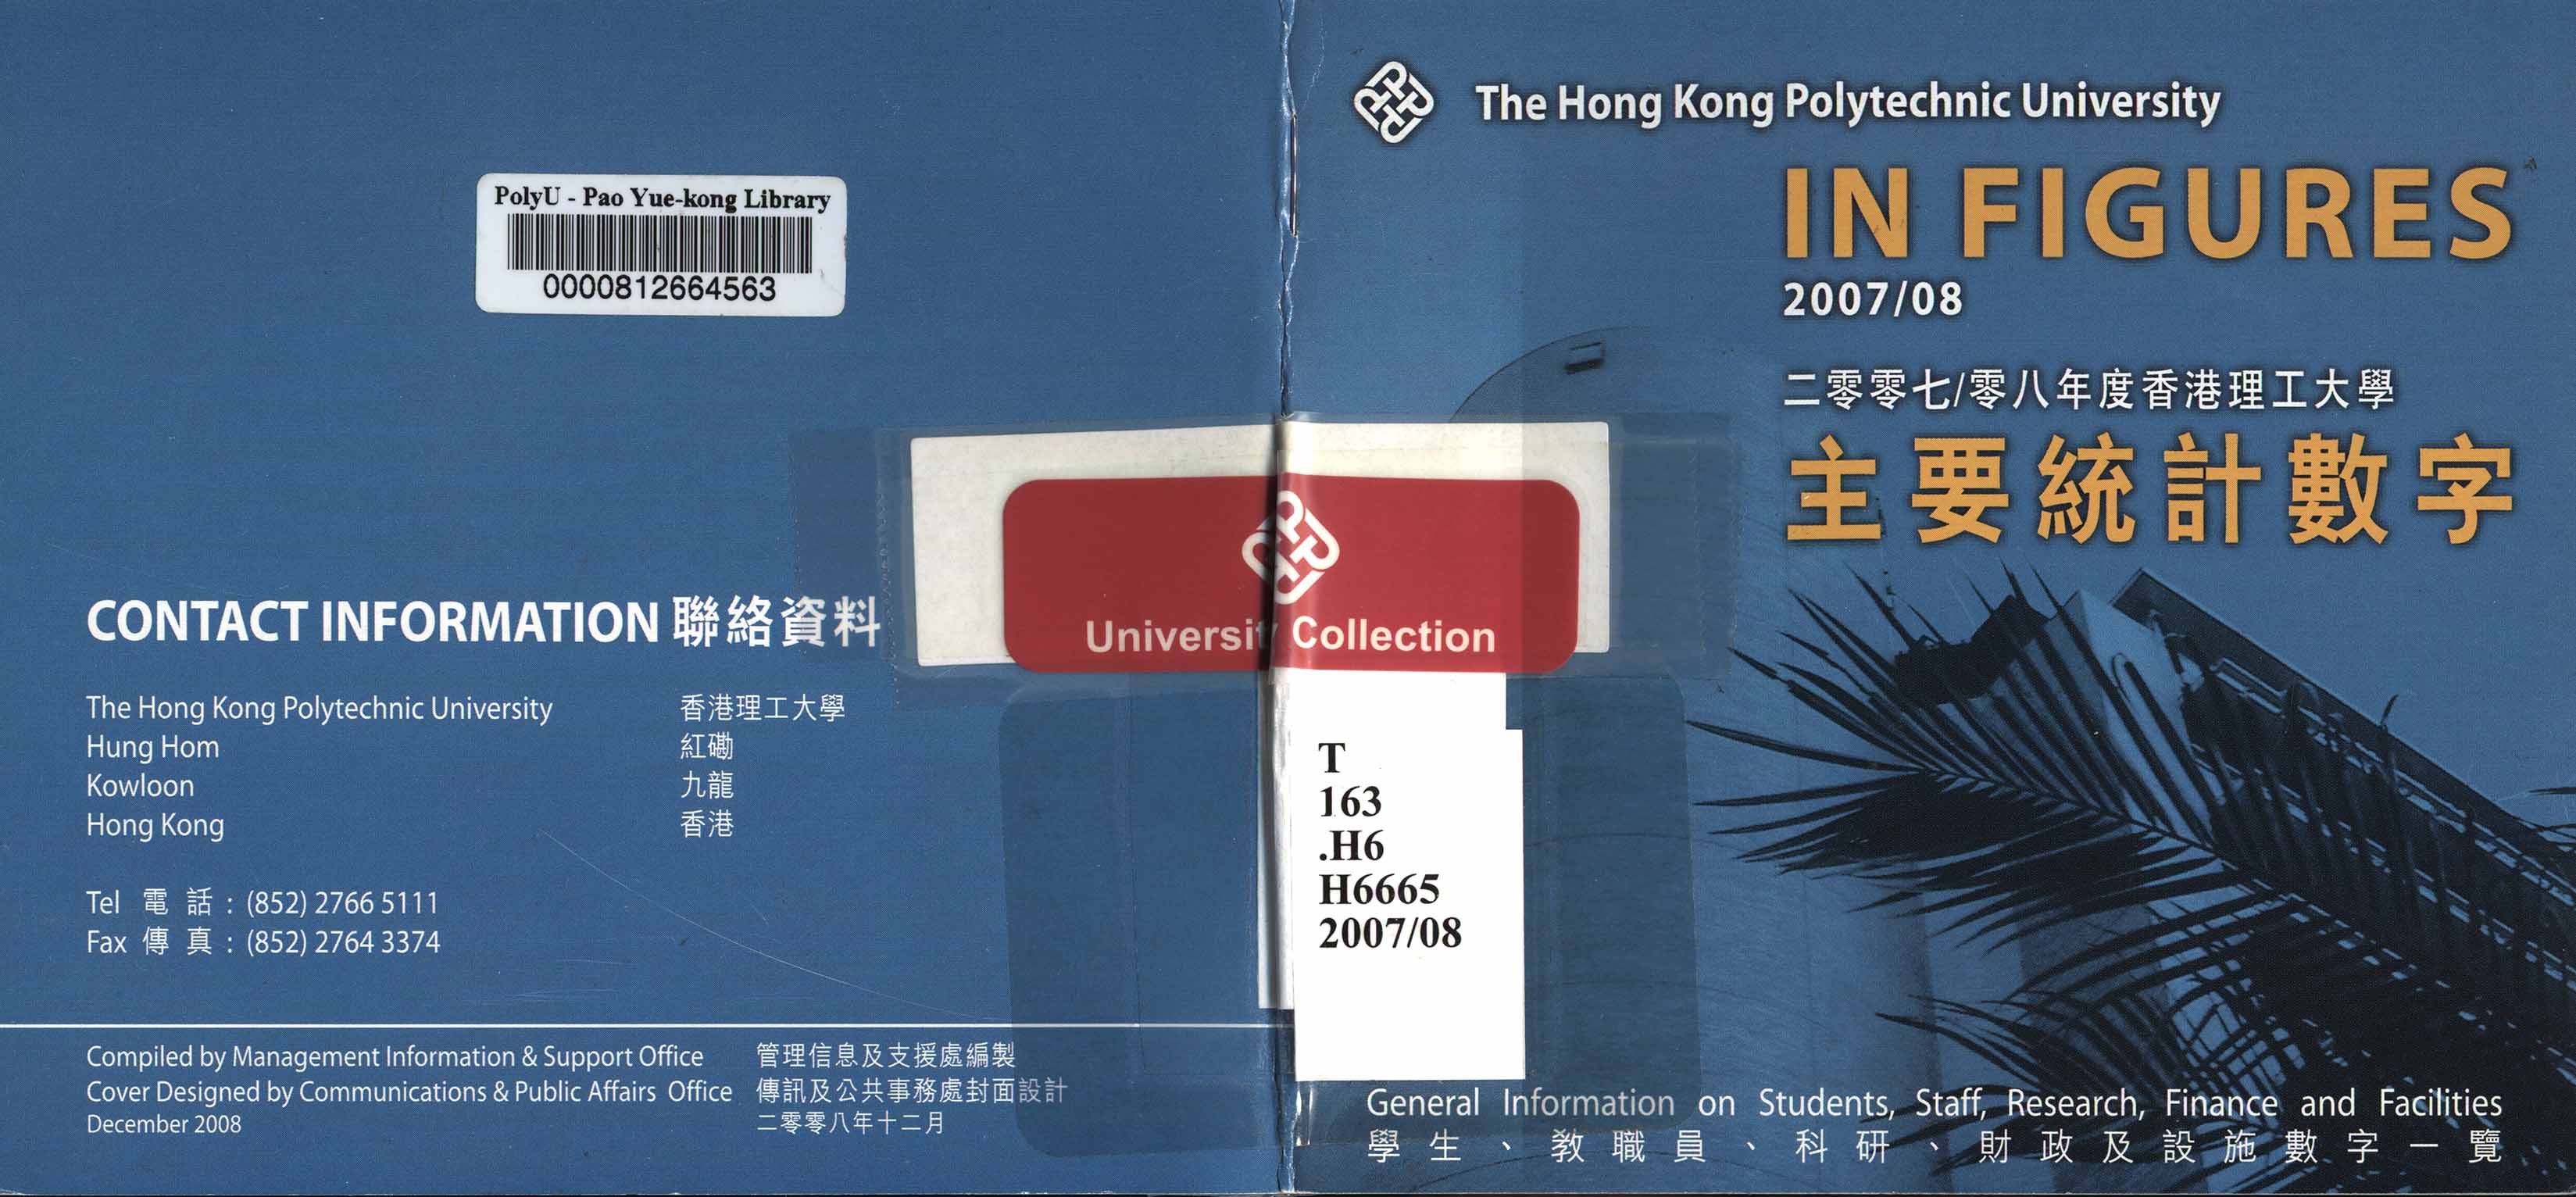 The Hong Kong Polytechnic University in figures 2007/08